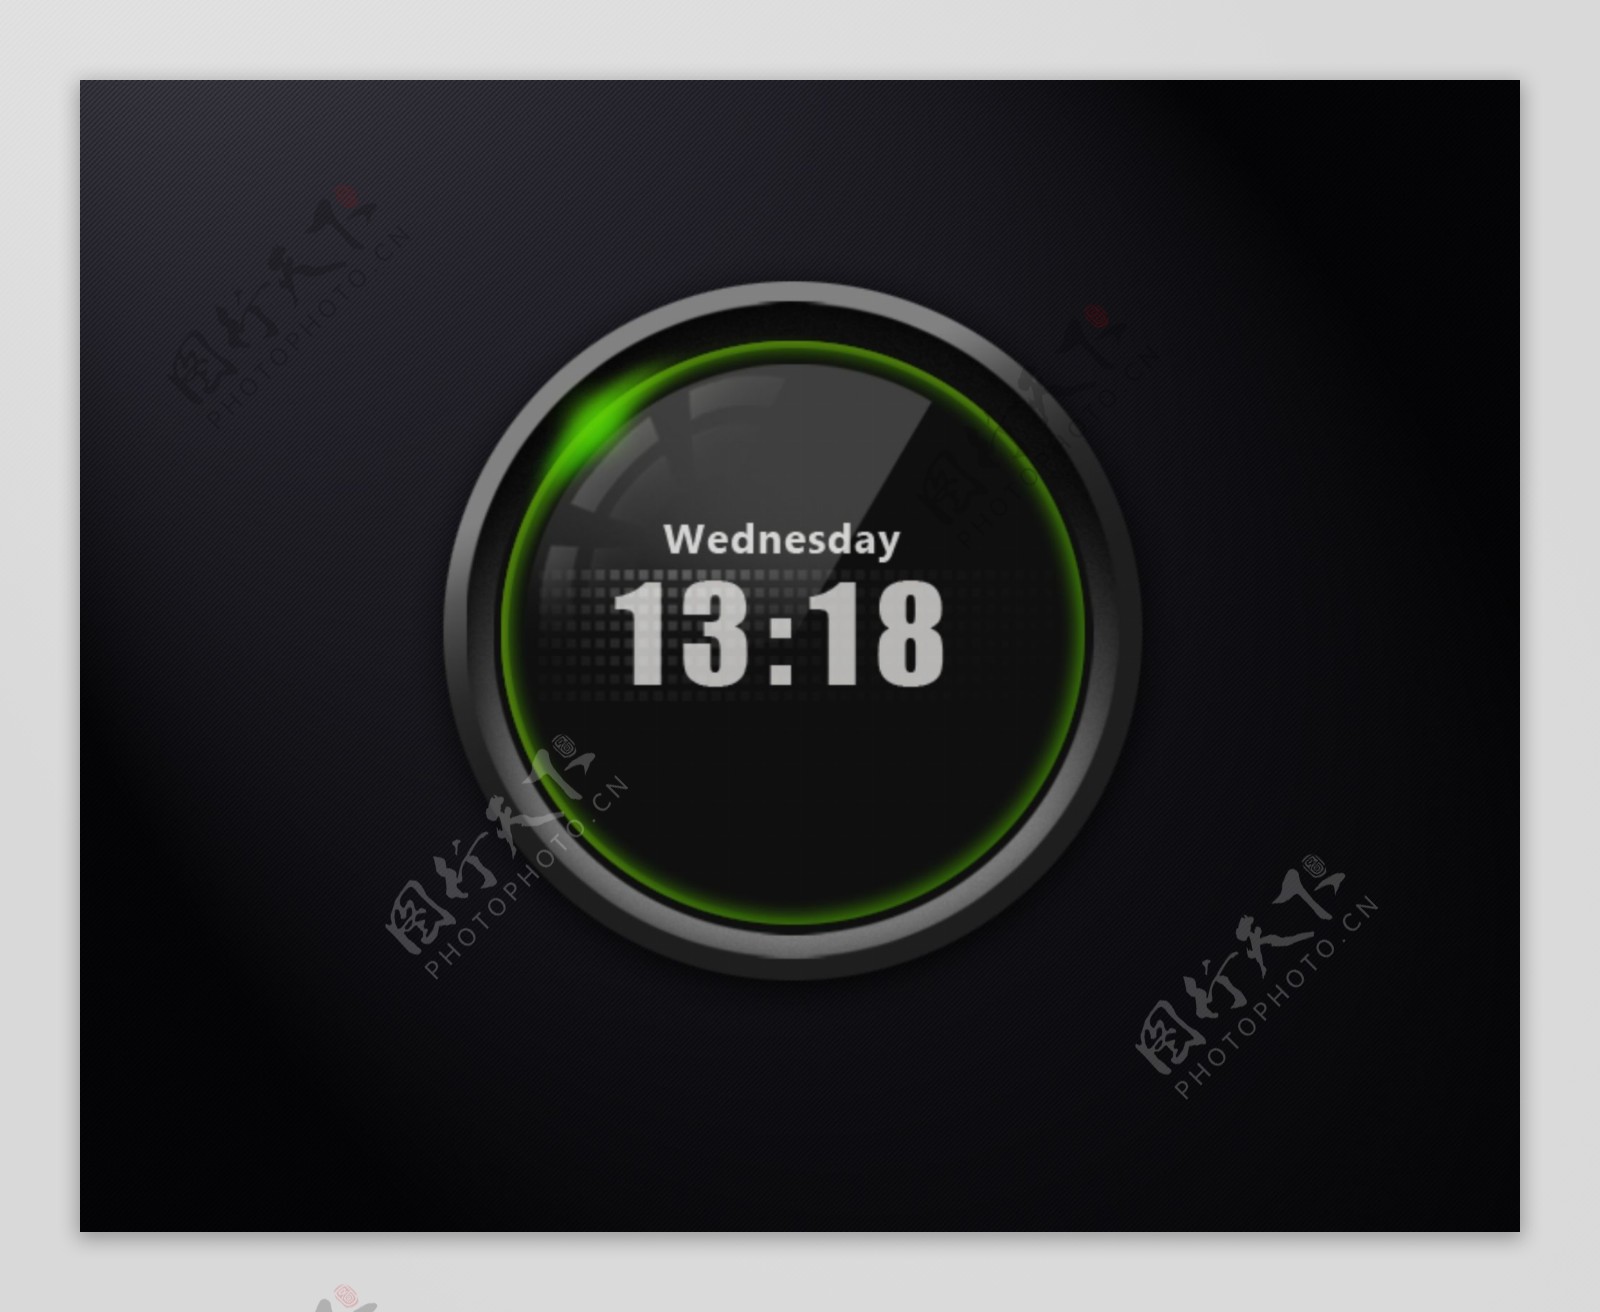 UI按键科技按钮时钟图片